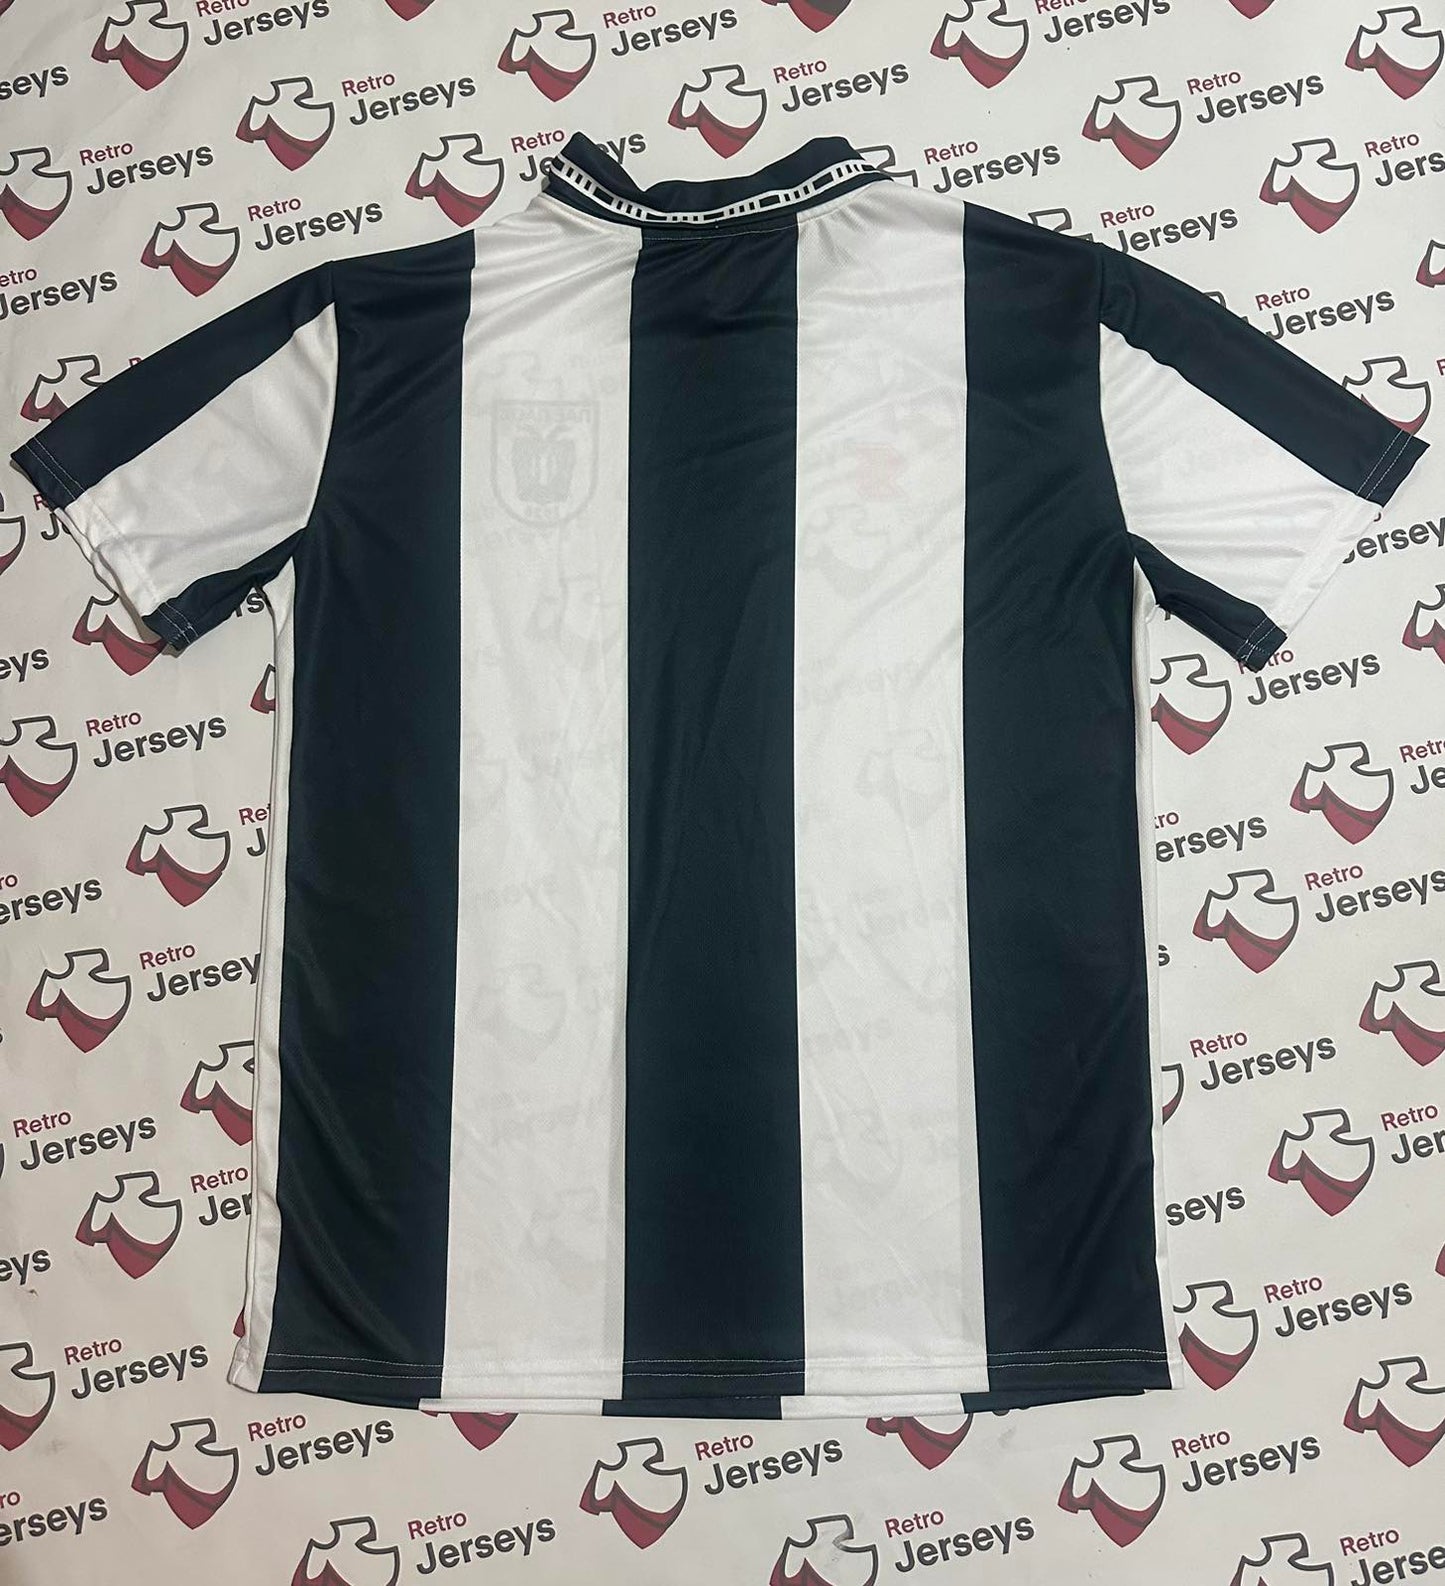 PAOK Thessaloniki Shirt 1993-1994 Home - Retro Jerseys, φανέλα ΠΑΟΚ